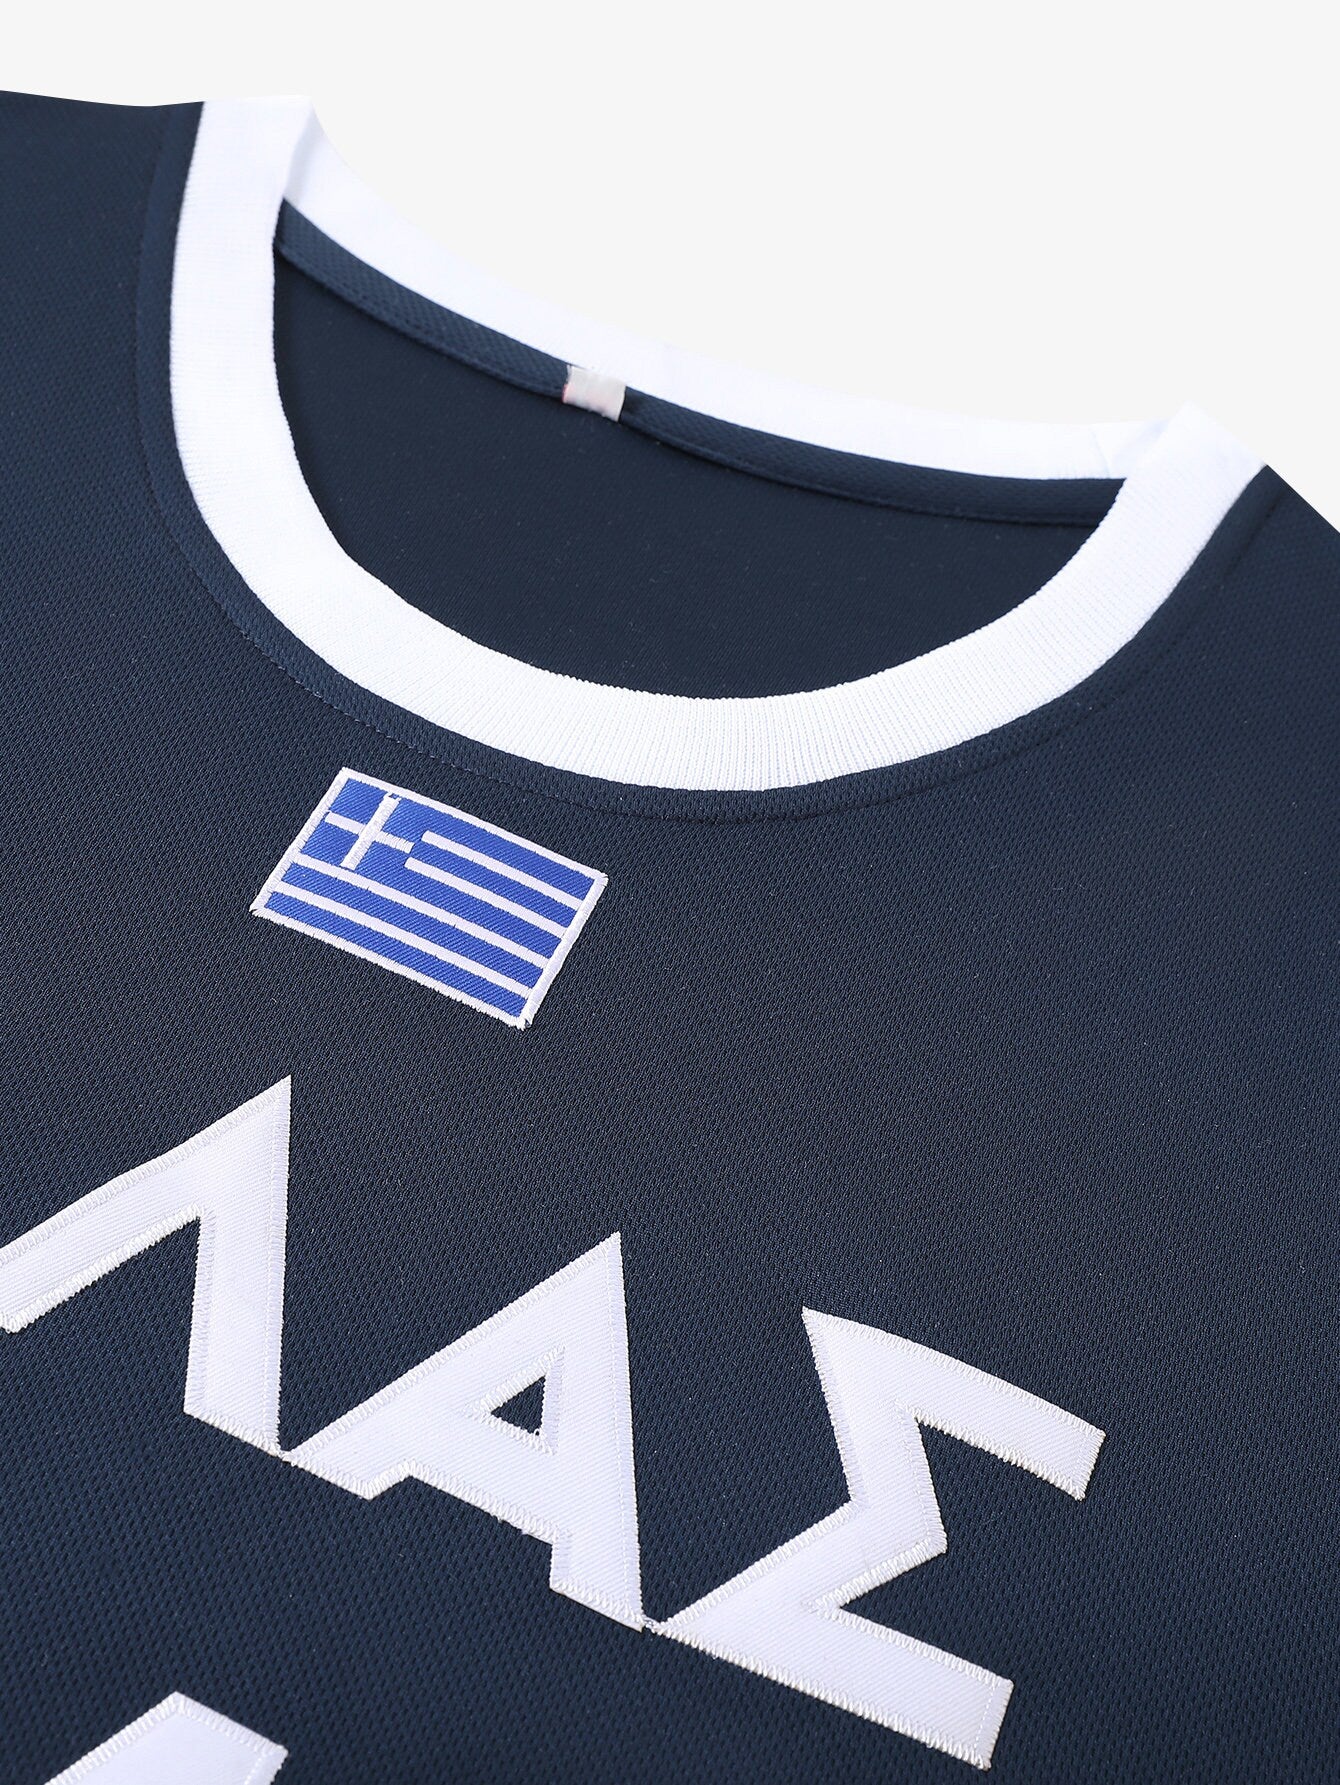 Greece Team Giannis Antetokounmpo 2020 Edition Basketball Jersey